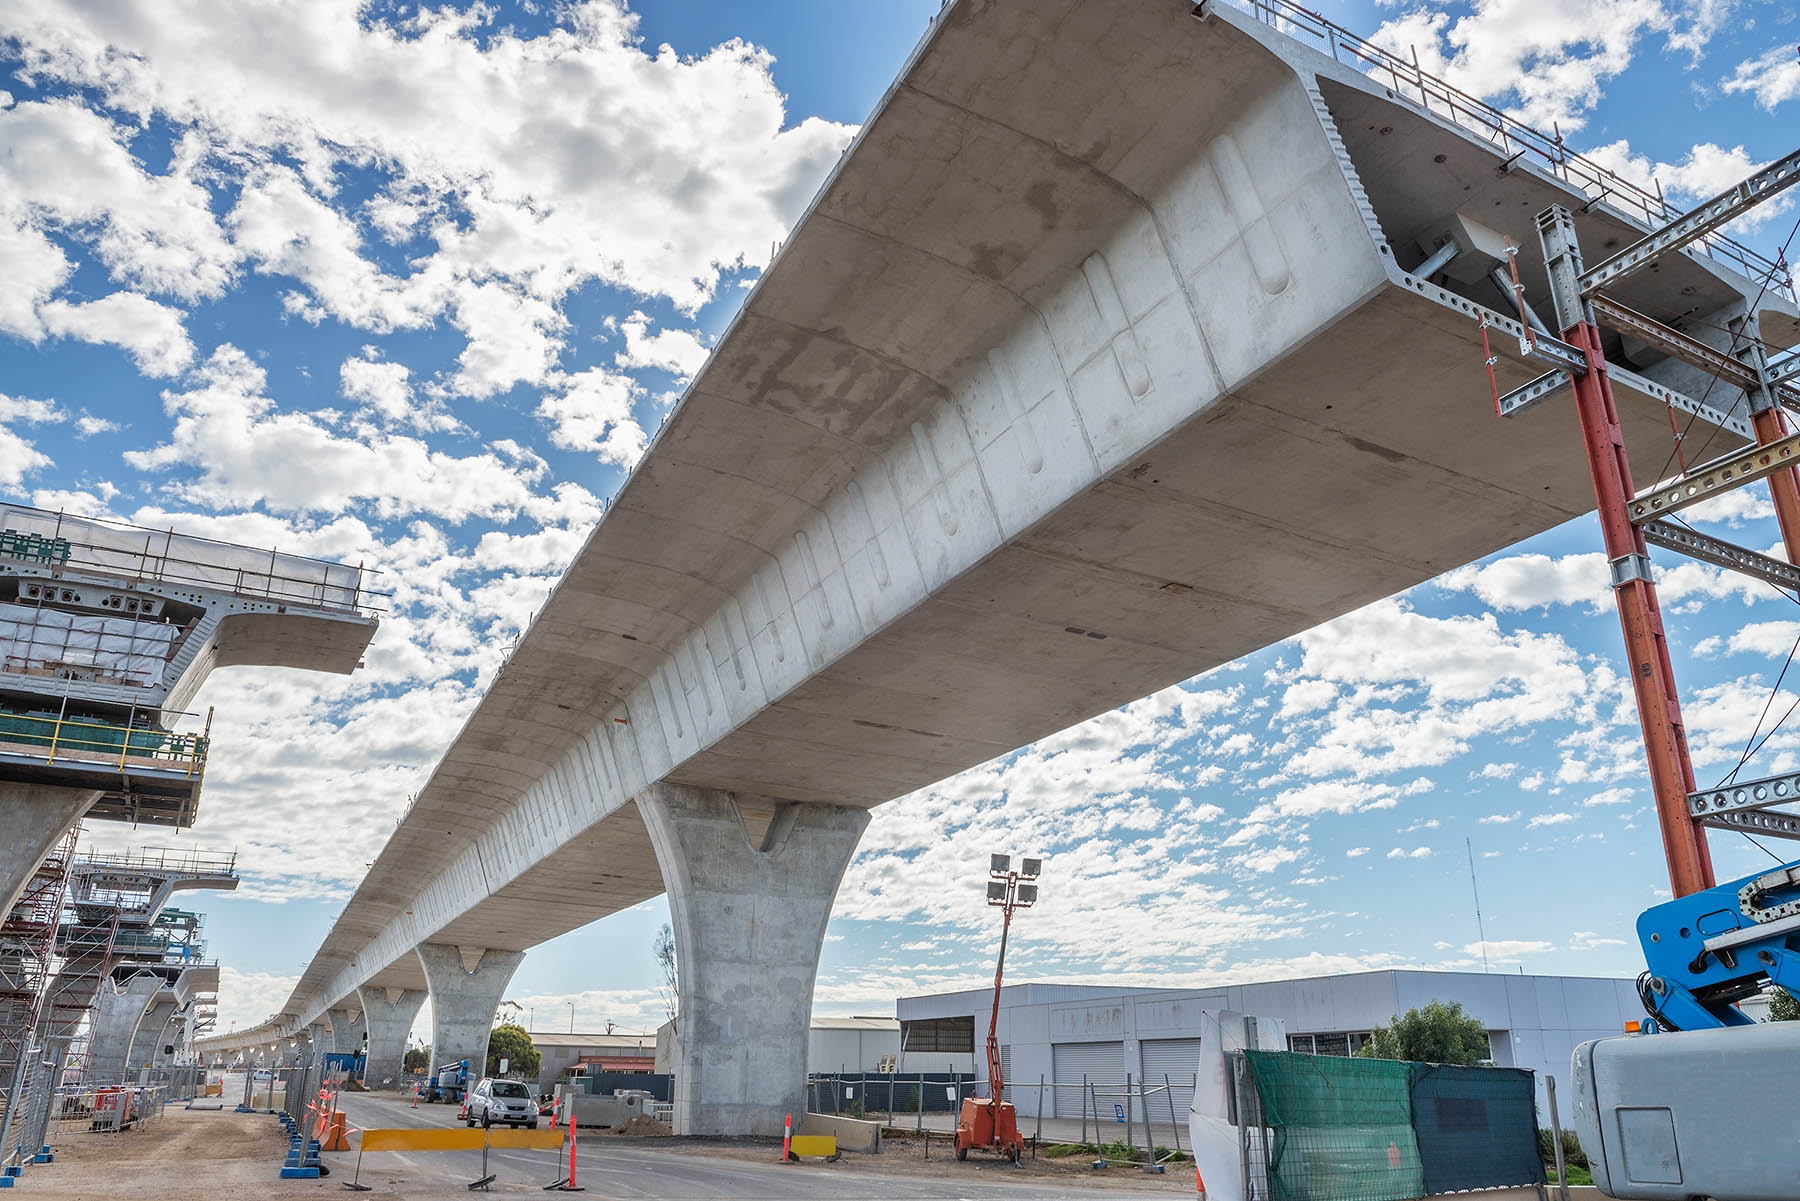 614 Concrete - Concrete Bridge Construction: Engineering Marvels and Structural Integrity